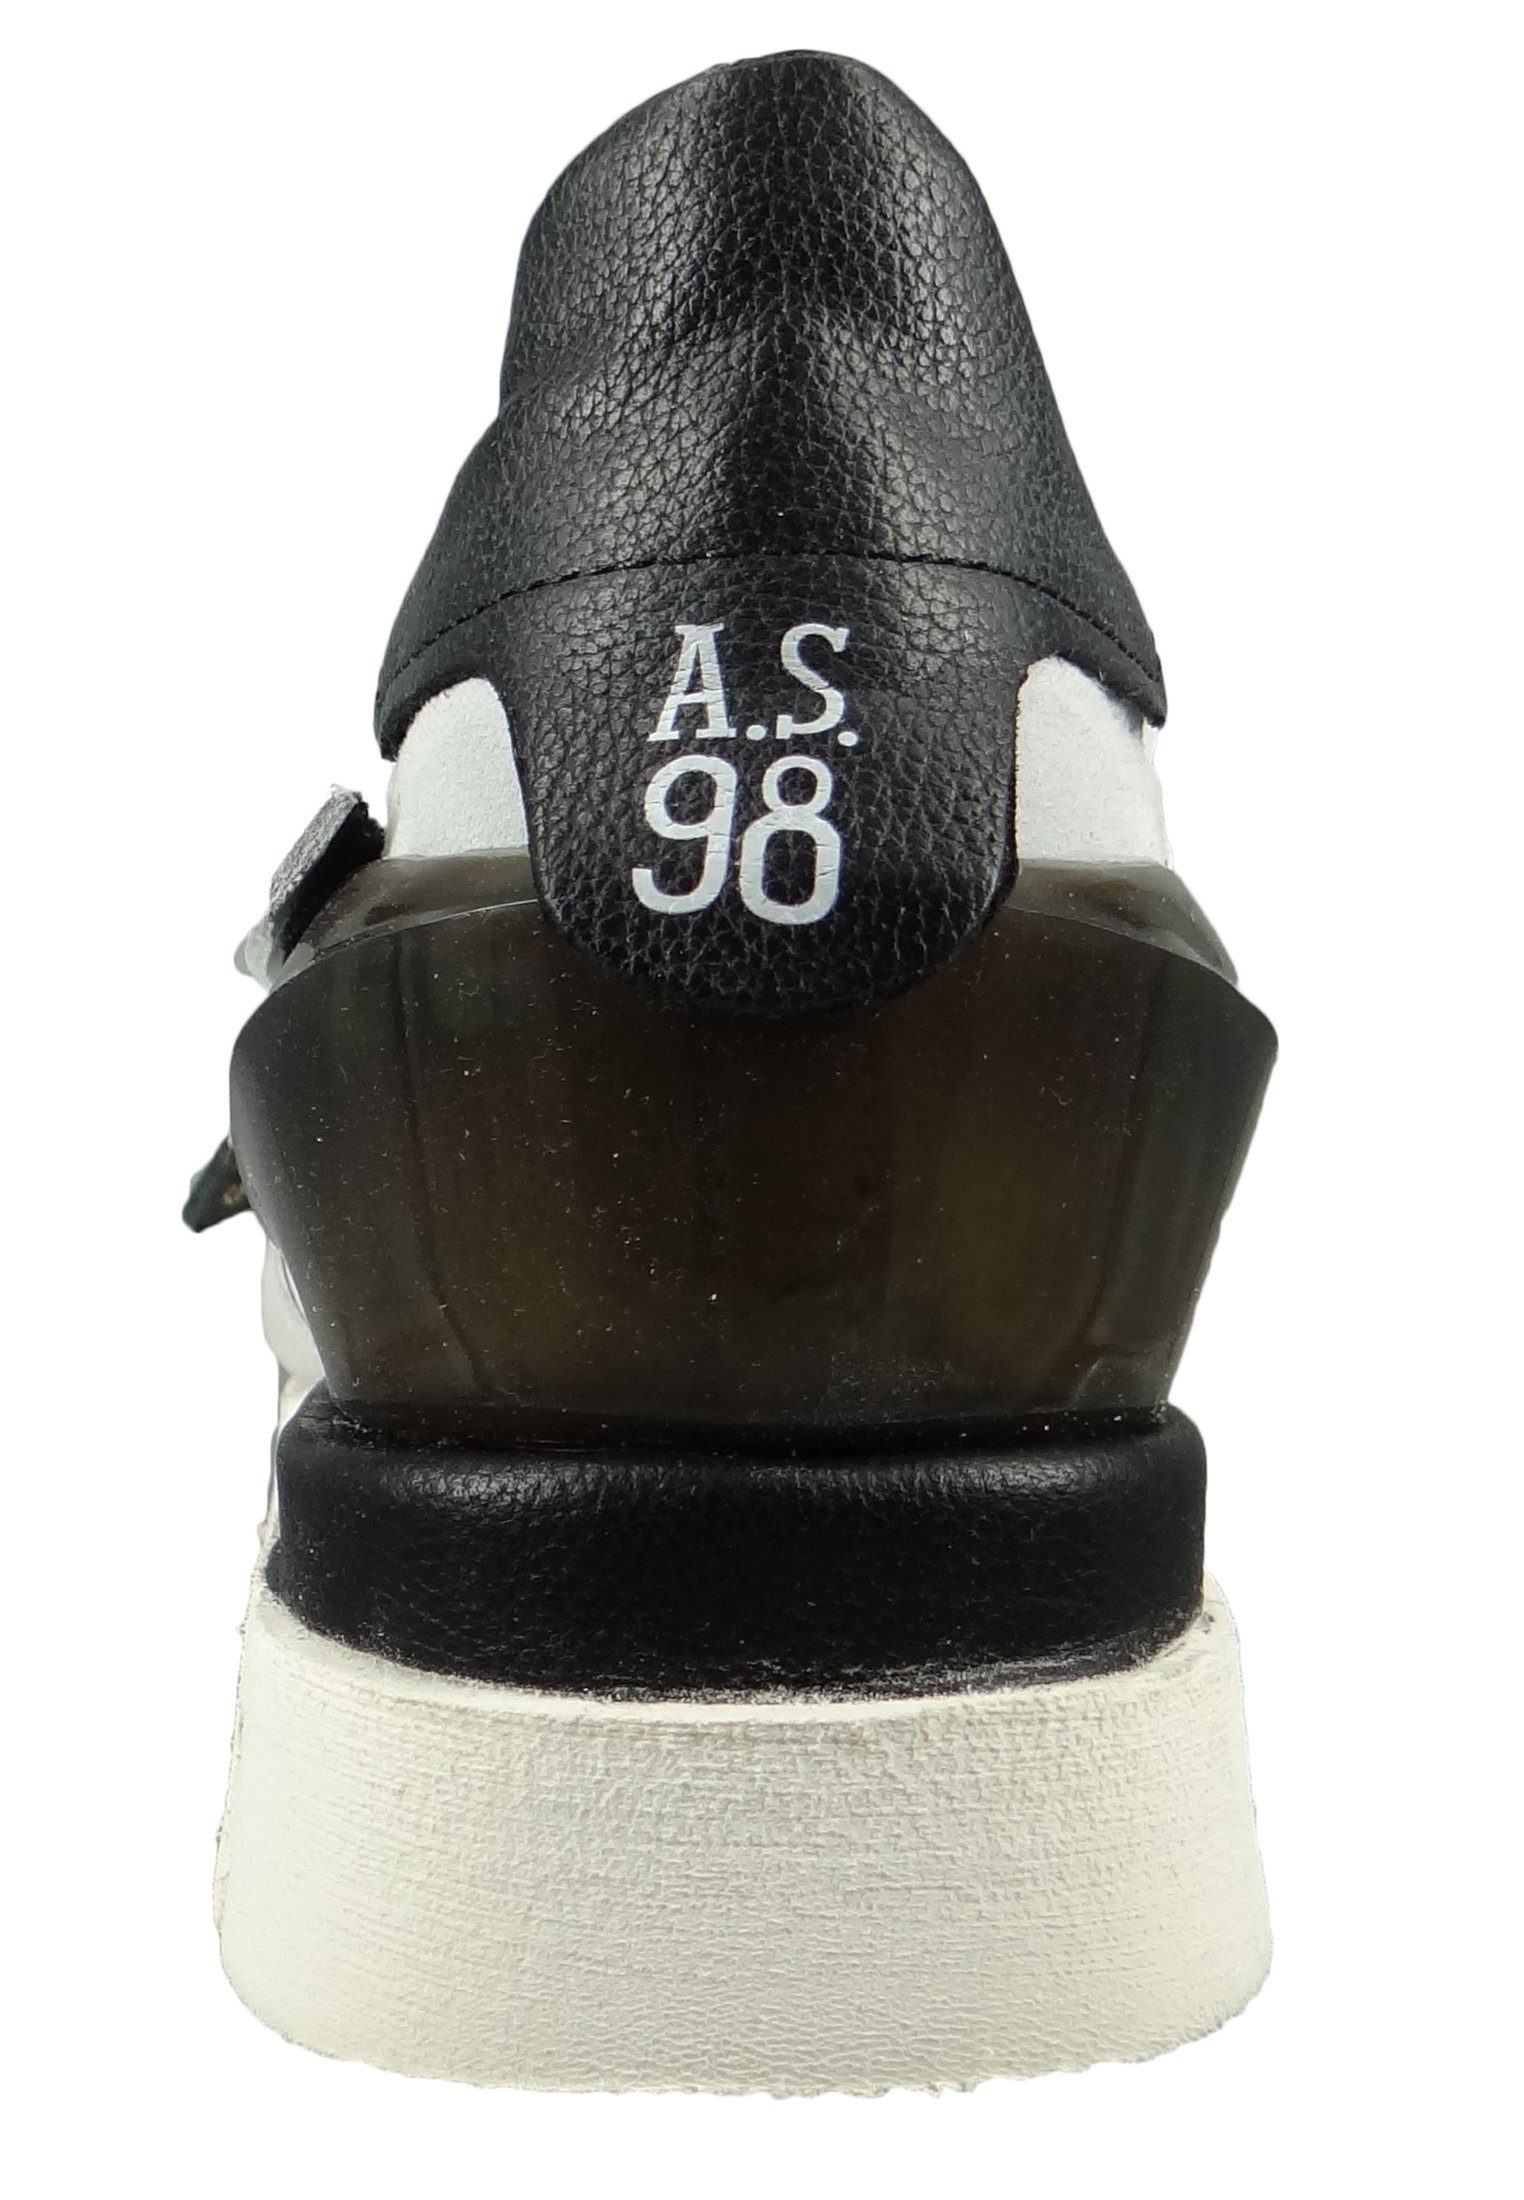 Denastar A.S.98 A13111-0101-0001 Sneaker Bianco